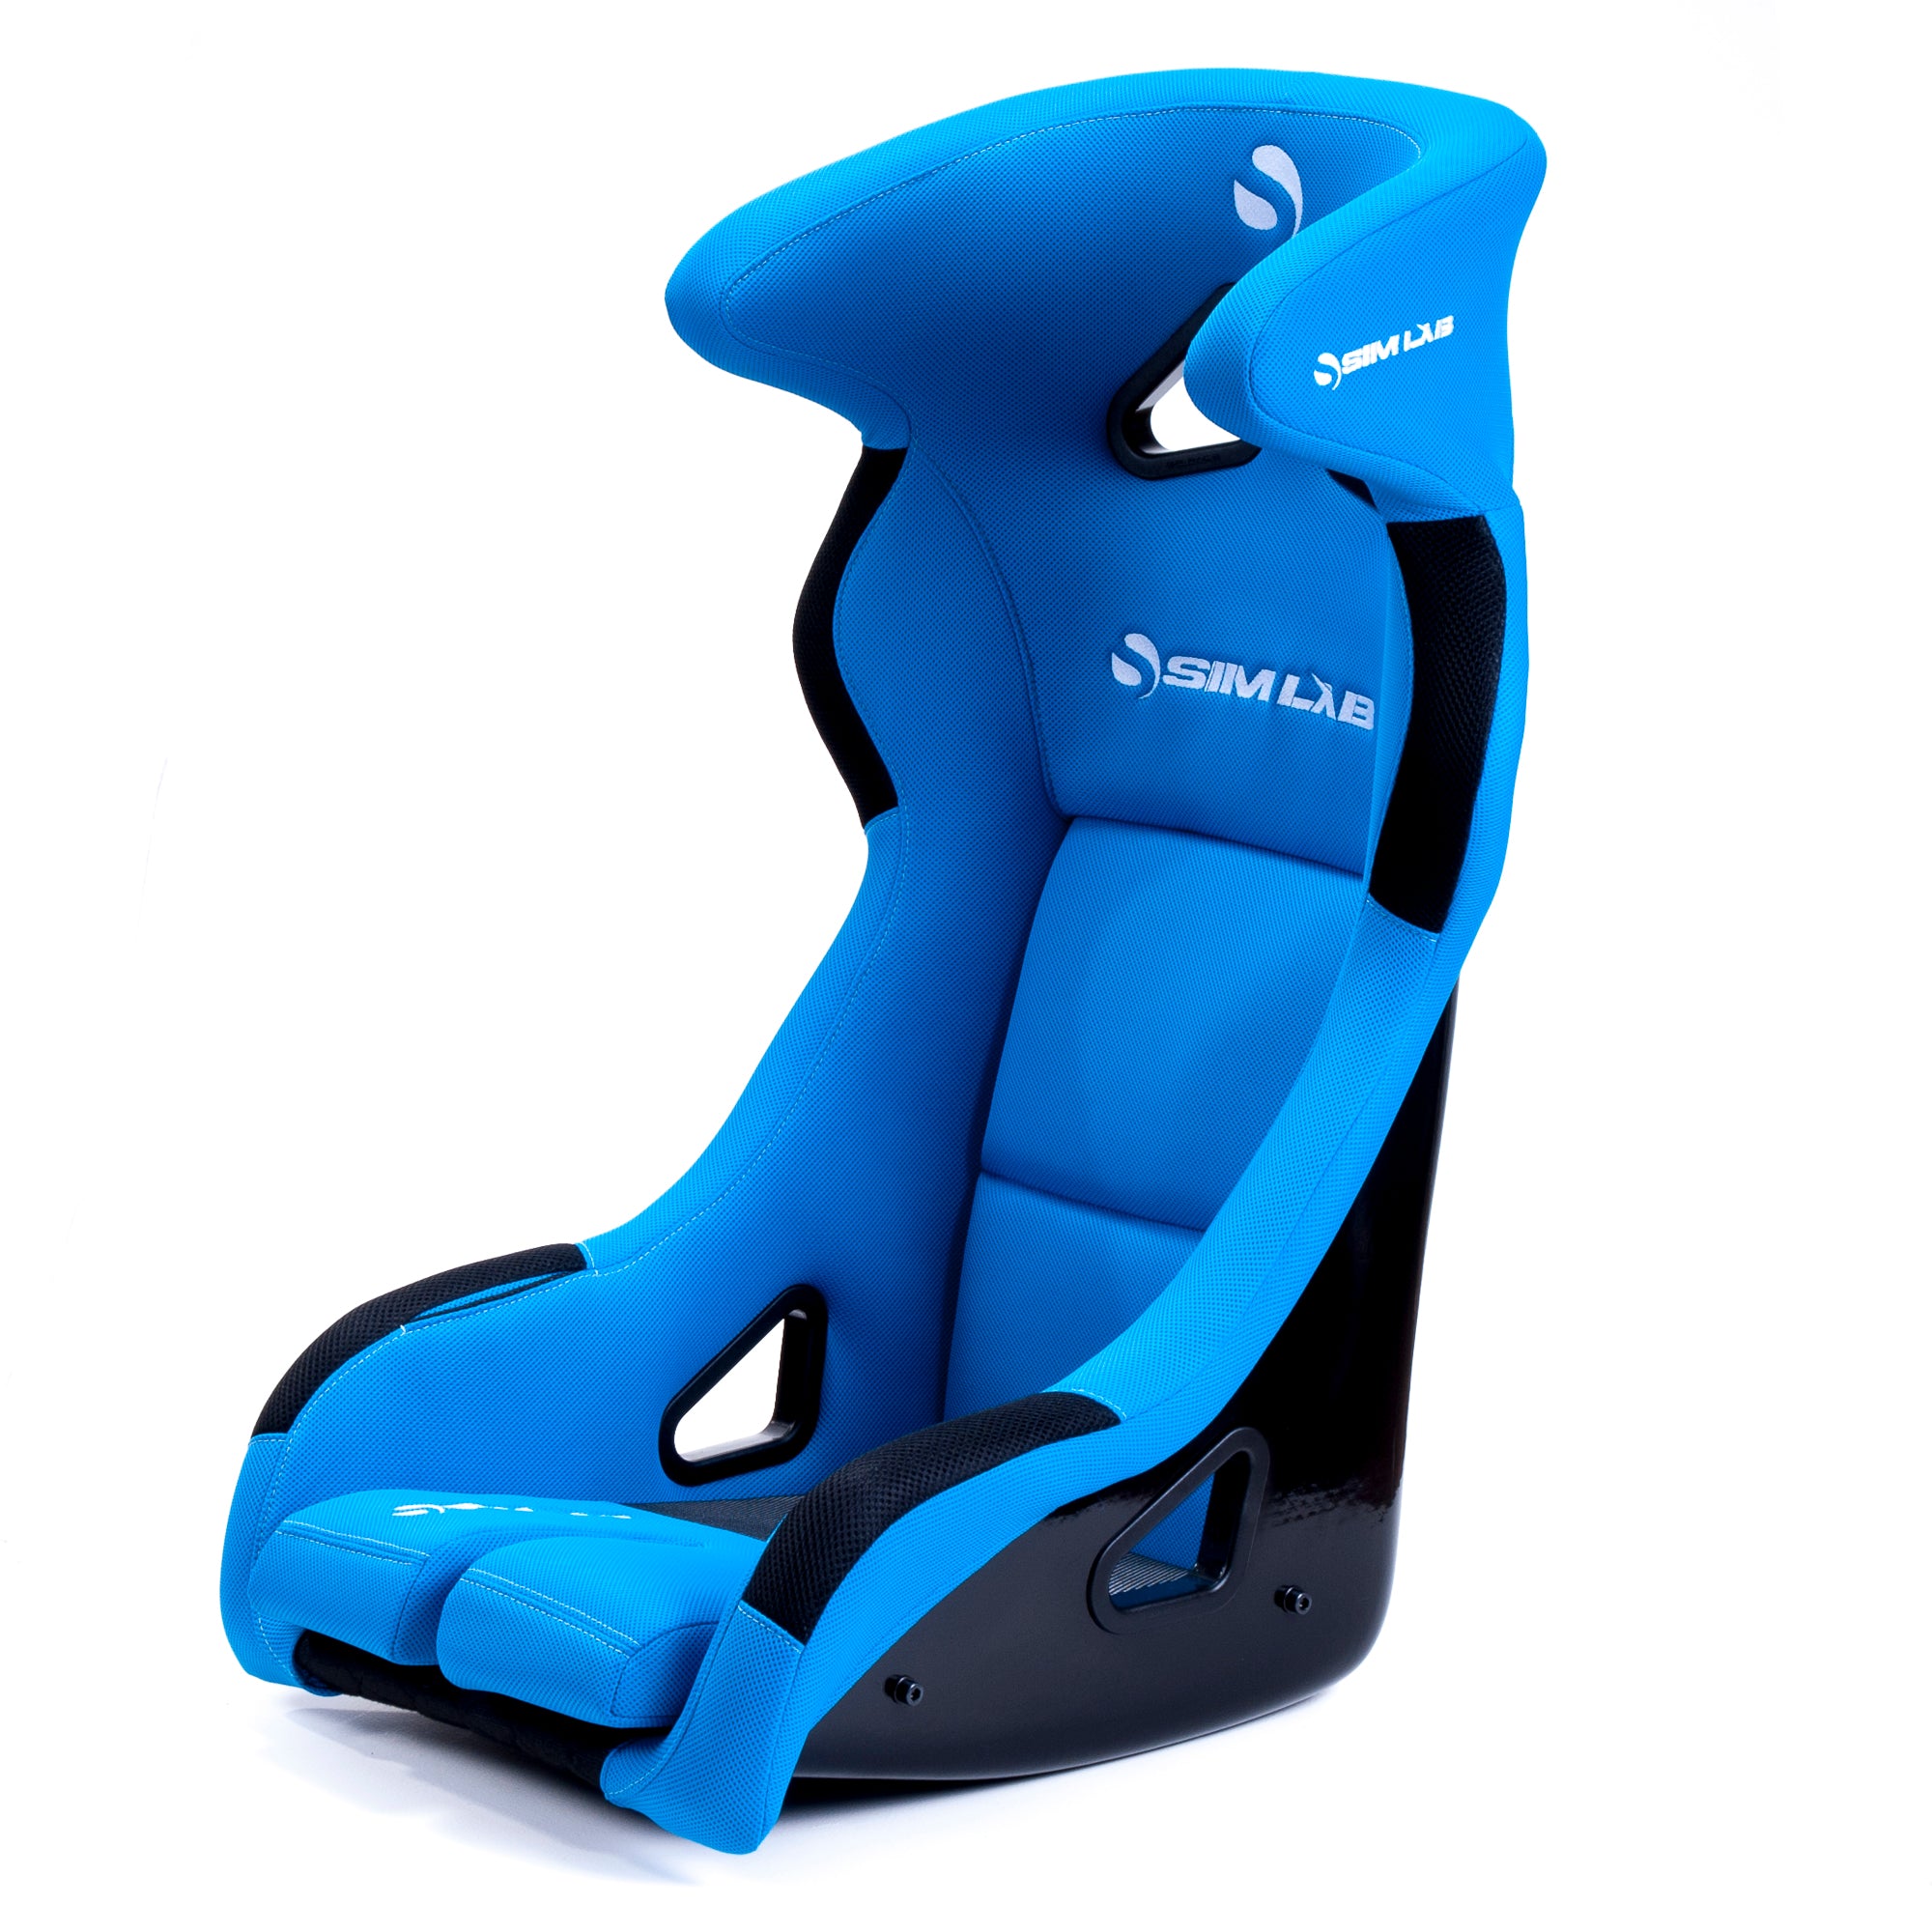 Sim-Lab Speed 1 Sim Racing Bucket Seat